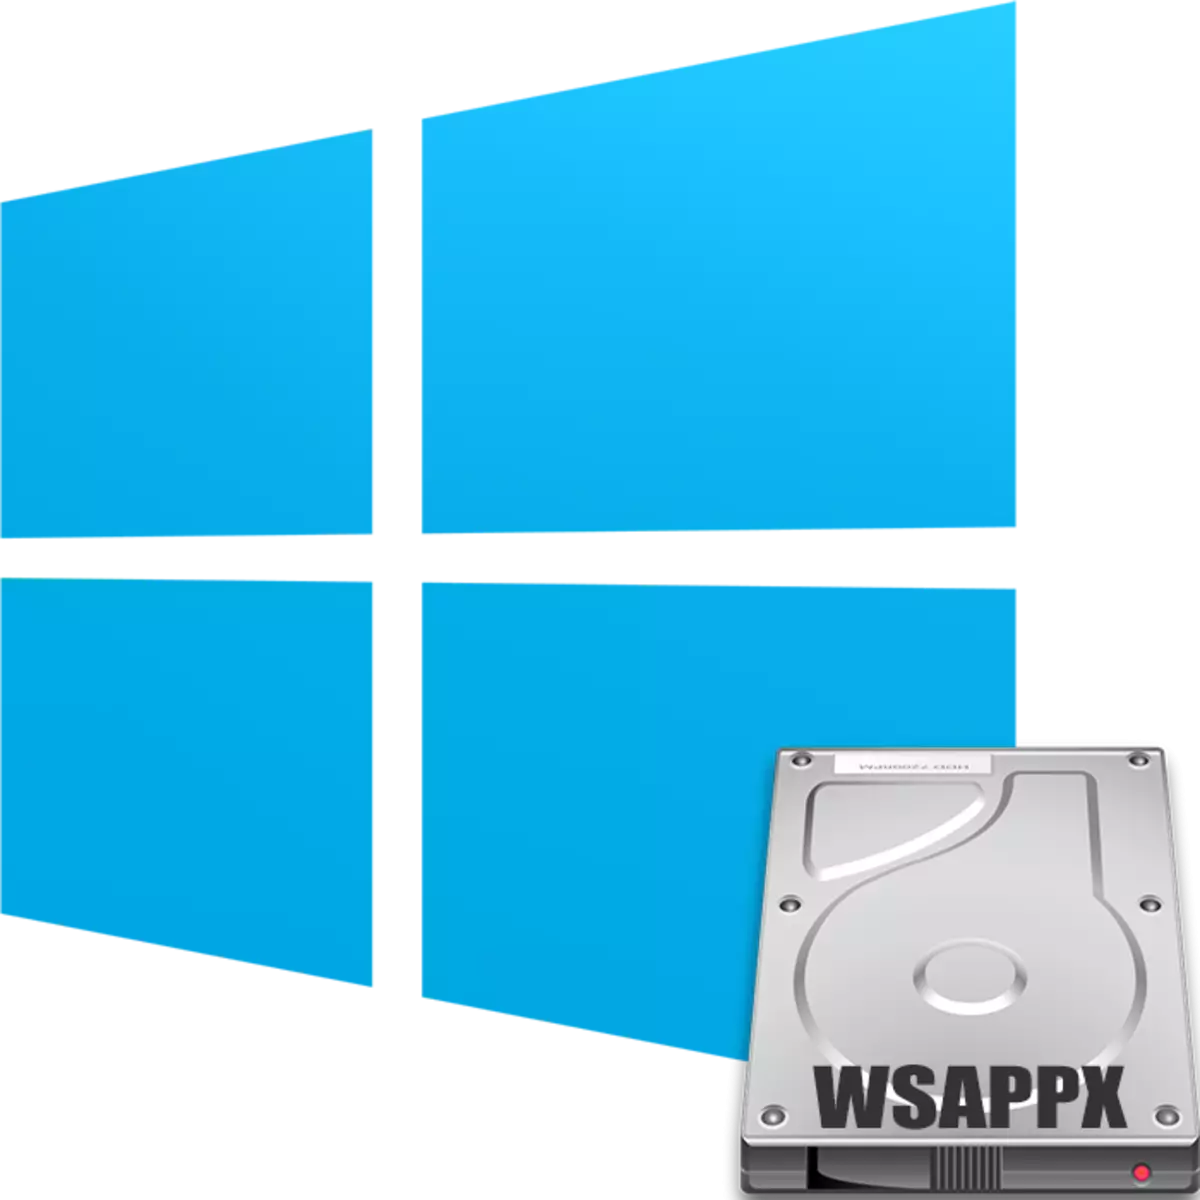 WSappX process loads disk on windows 10